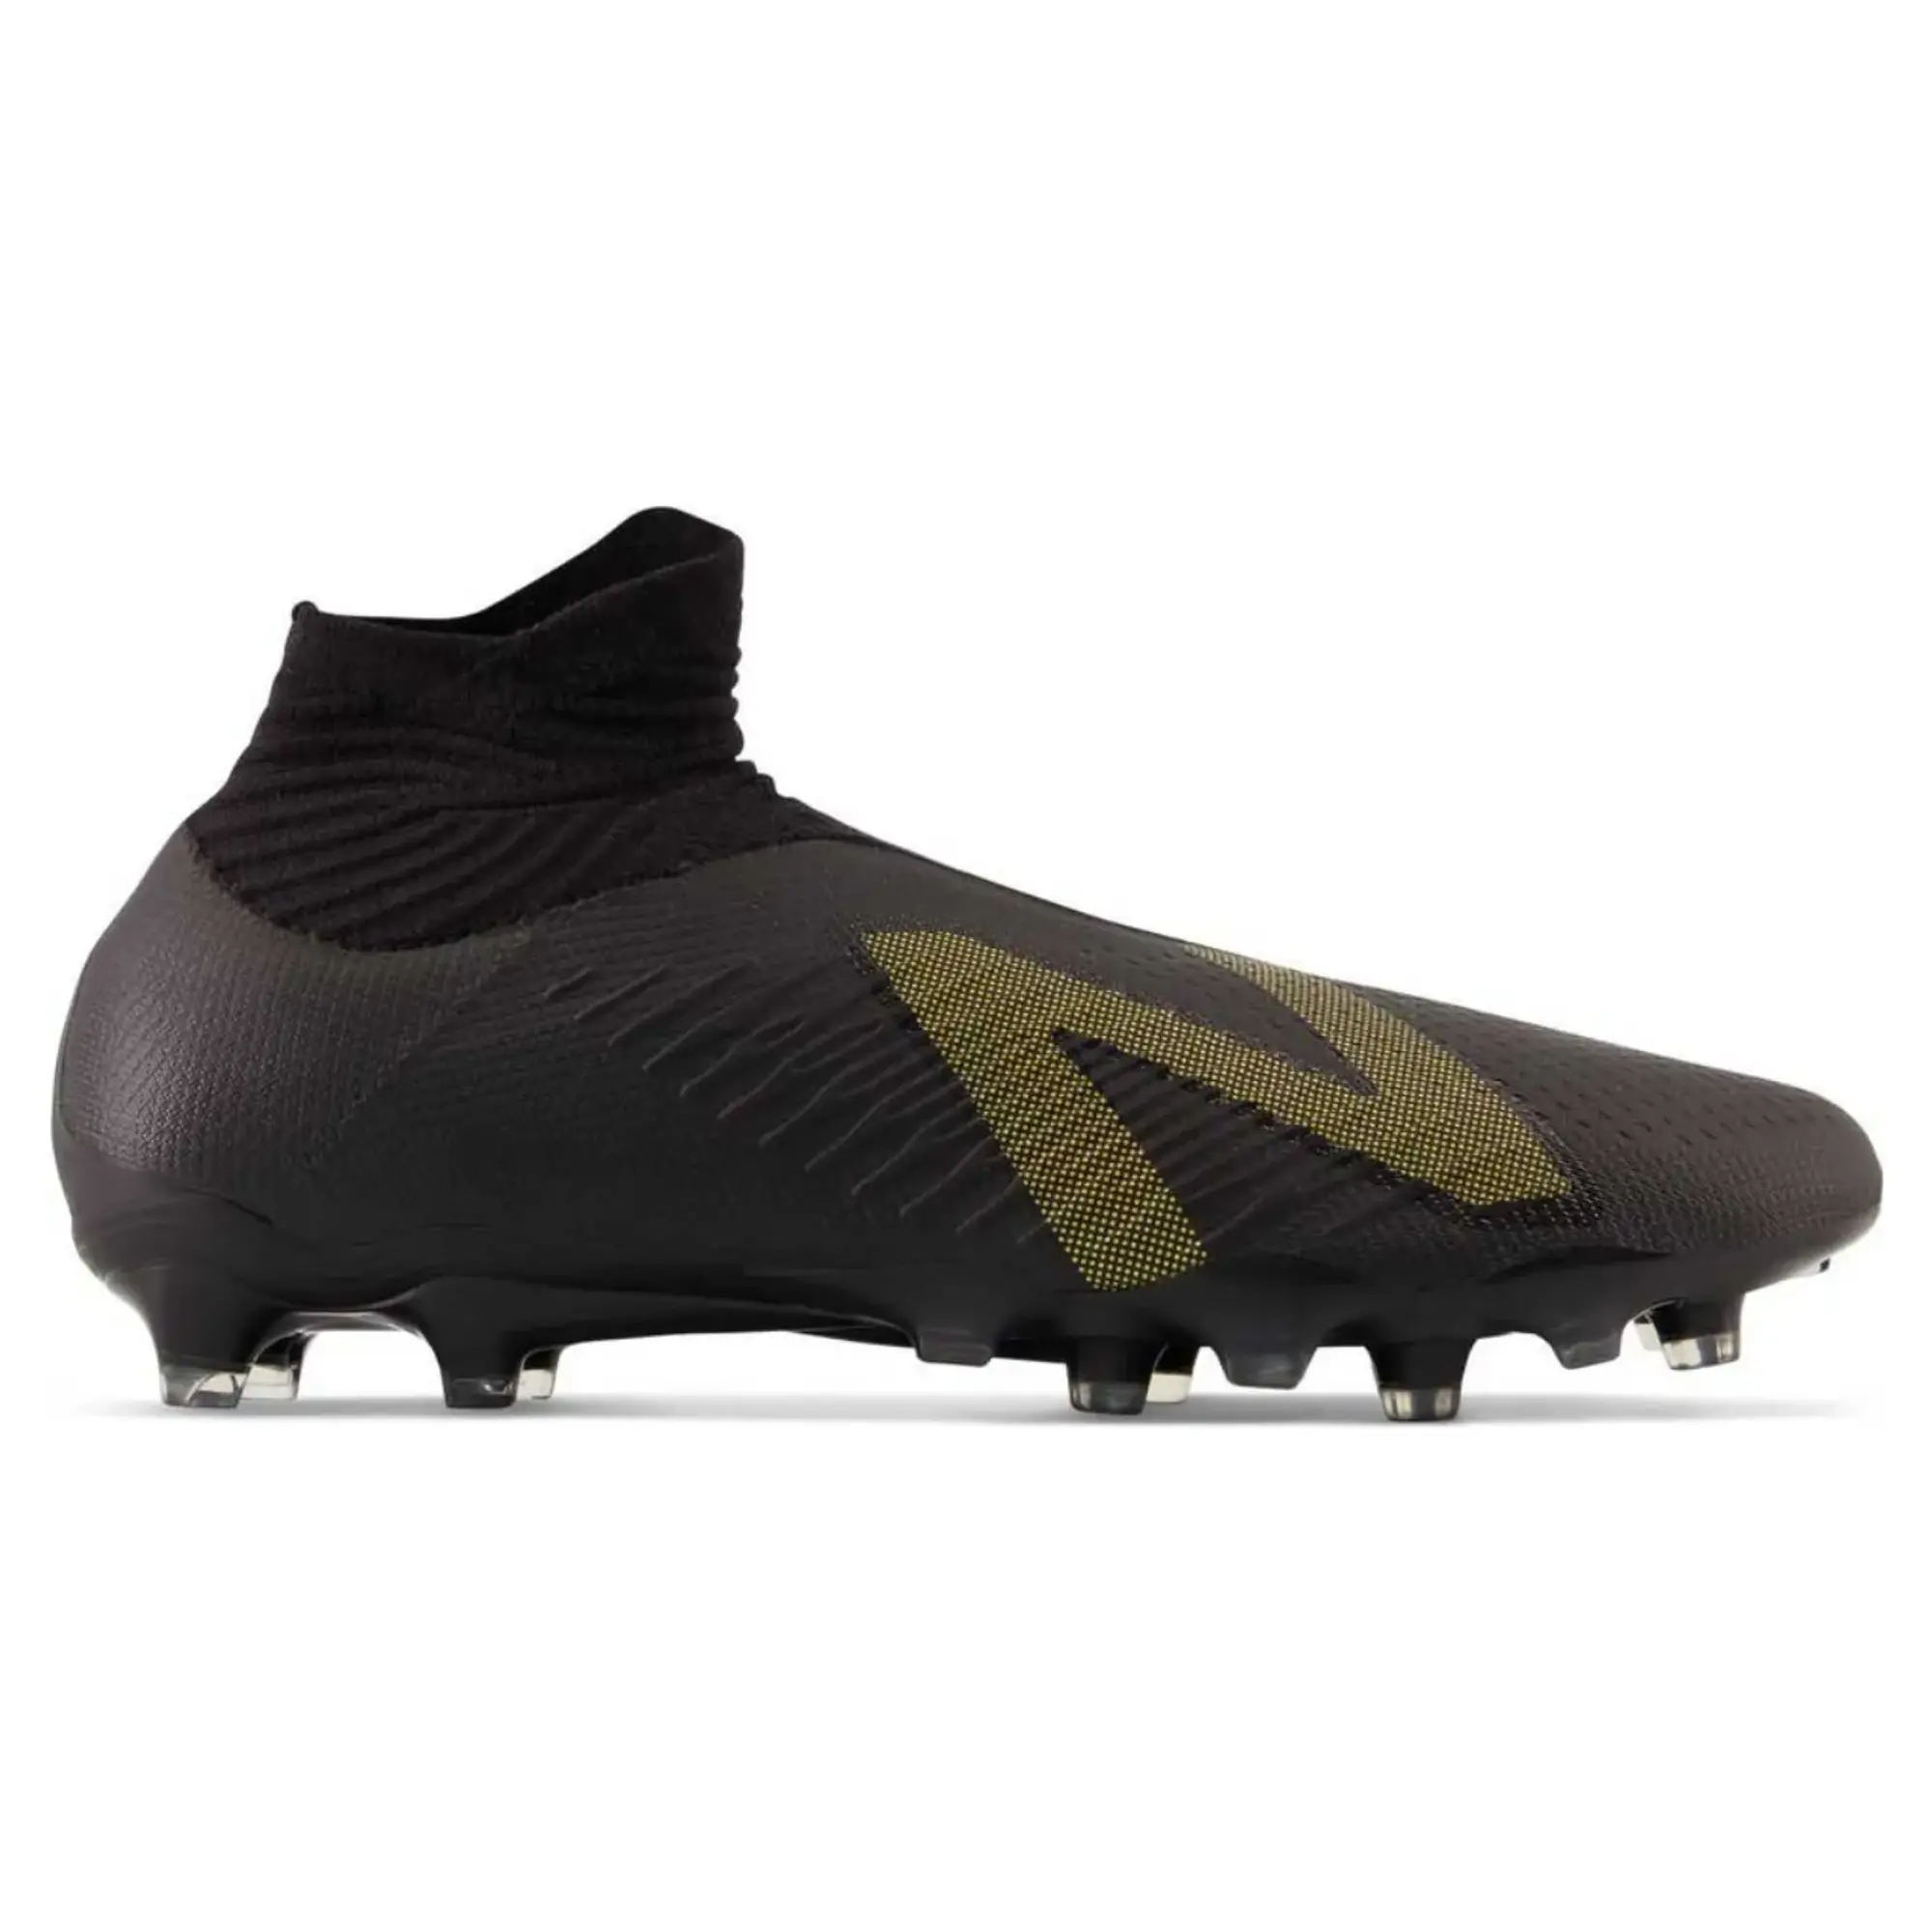 New Balance Tekela V4 Pro Firm Ground Football Boots Mens - Black